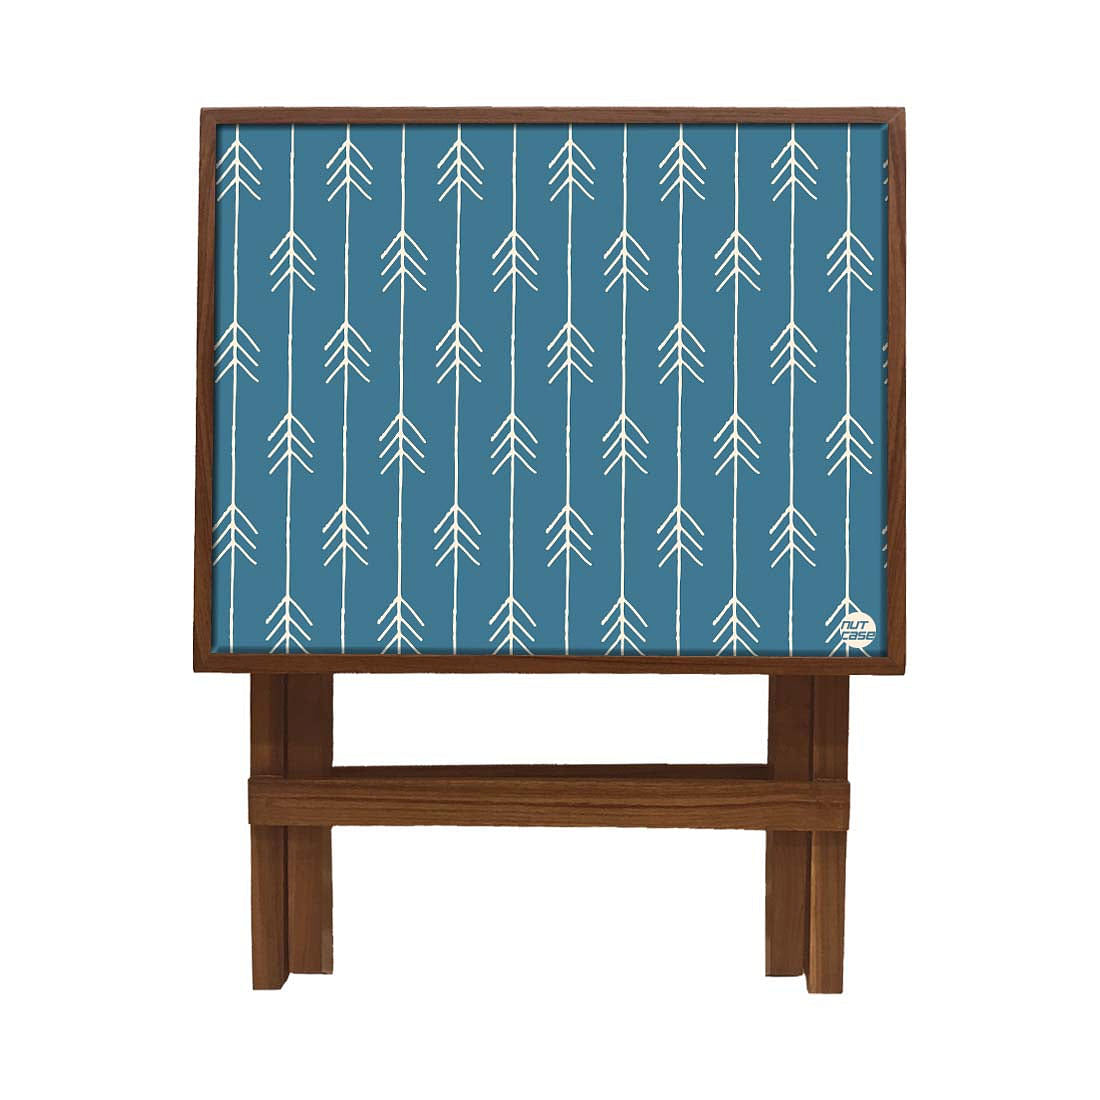 Folding Side Table - Teak Wood -Royal Blue Arrow Nutcase